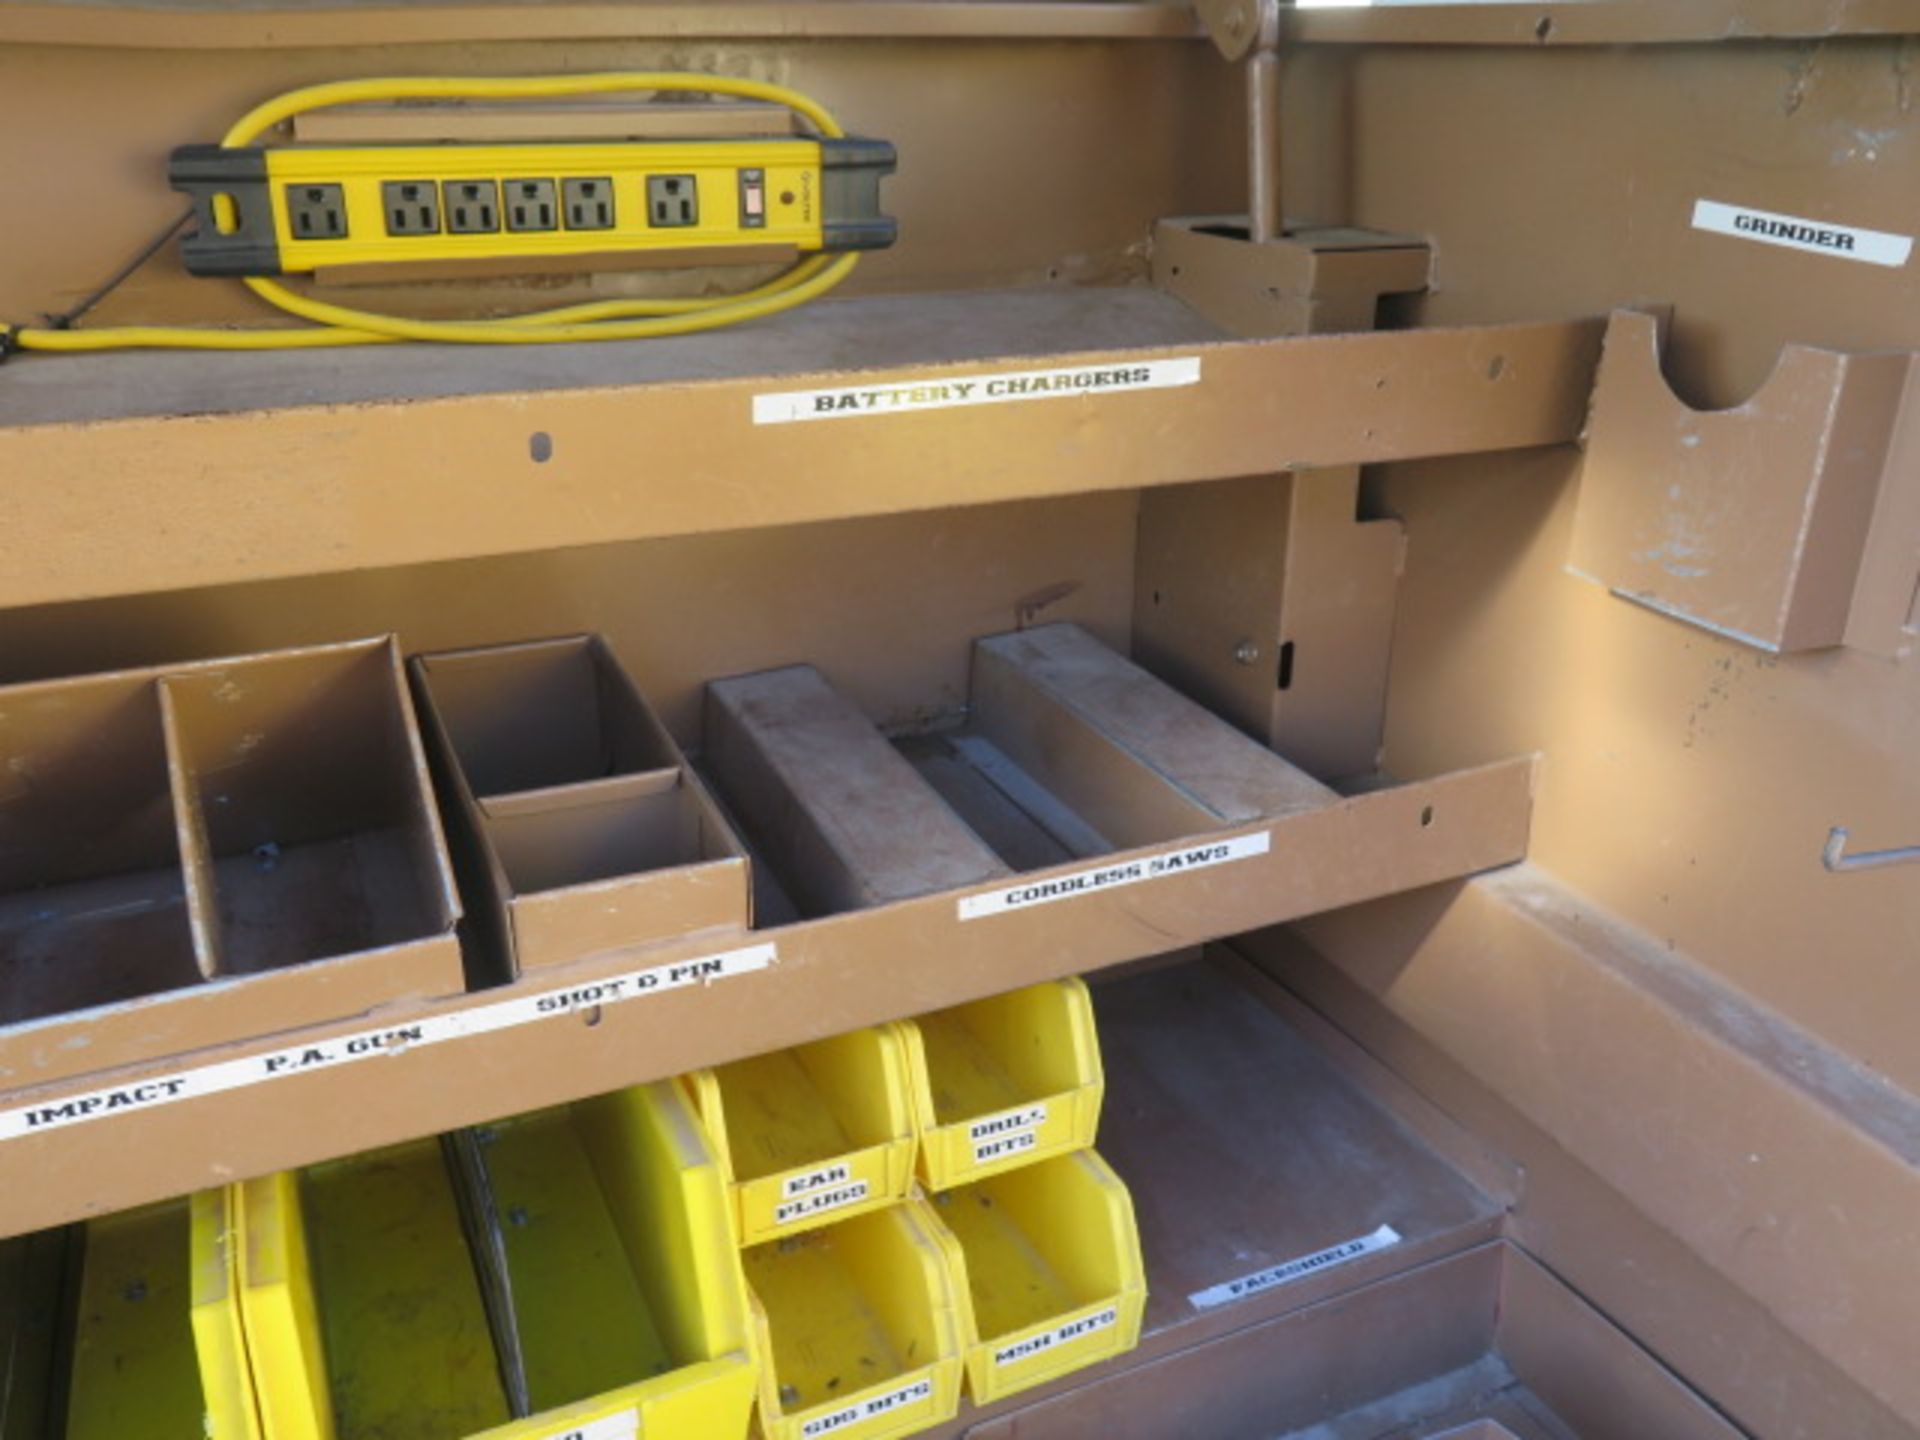 Knaack mdl. 89 Storagemaster Rolling Job Box (SOLD AS-IS - NO WARRANTY) - Image 5 of 9